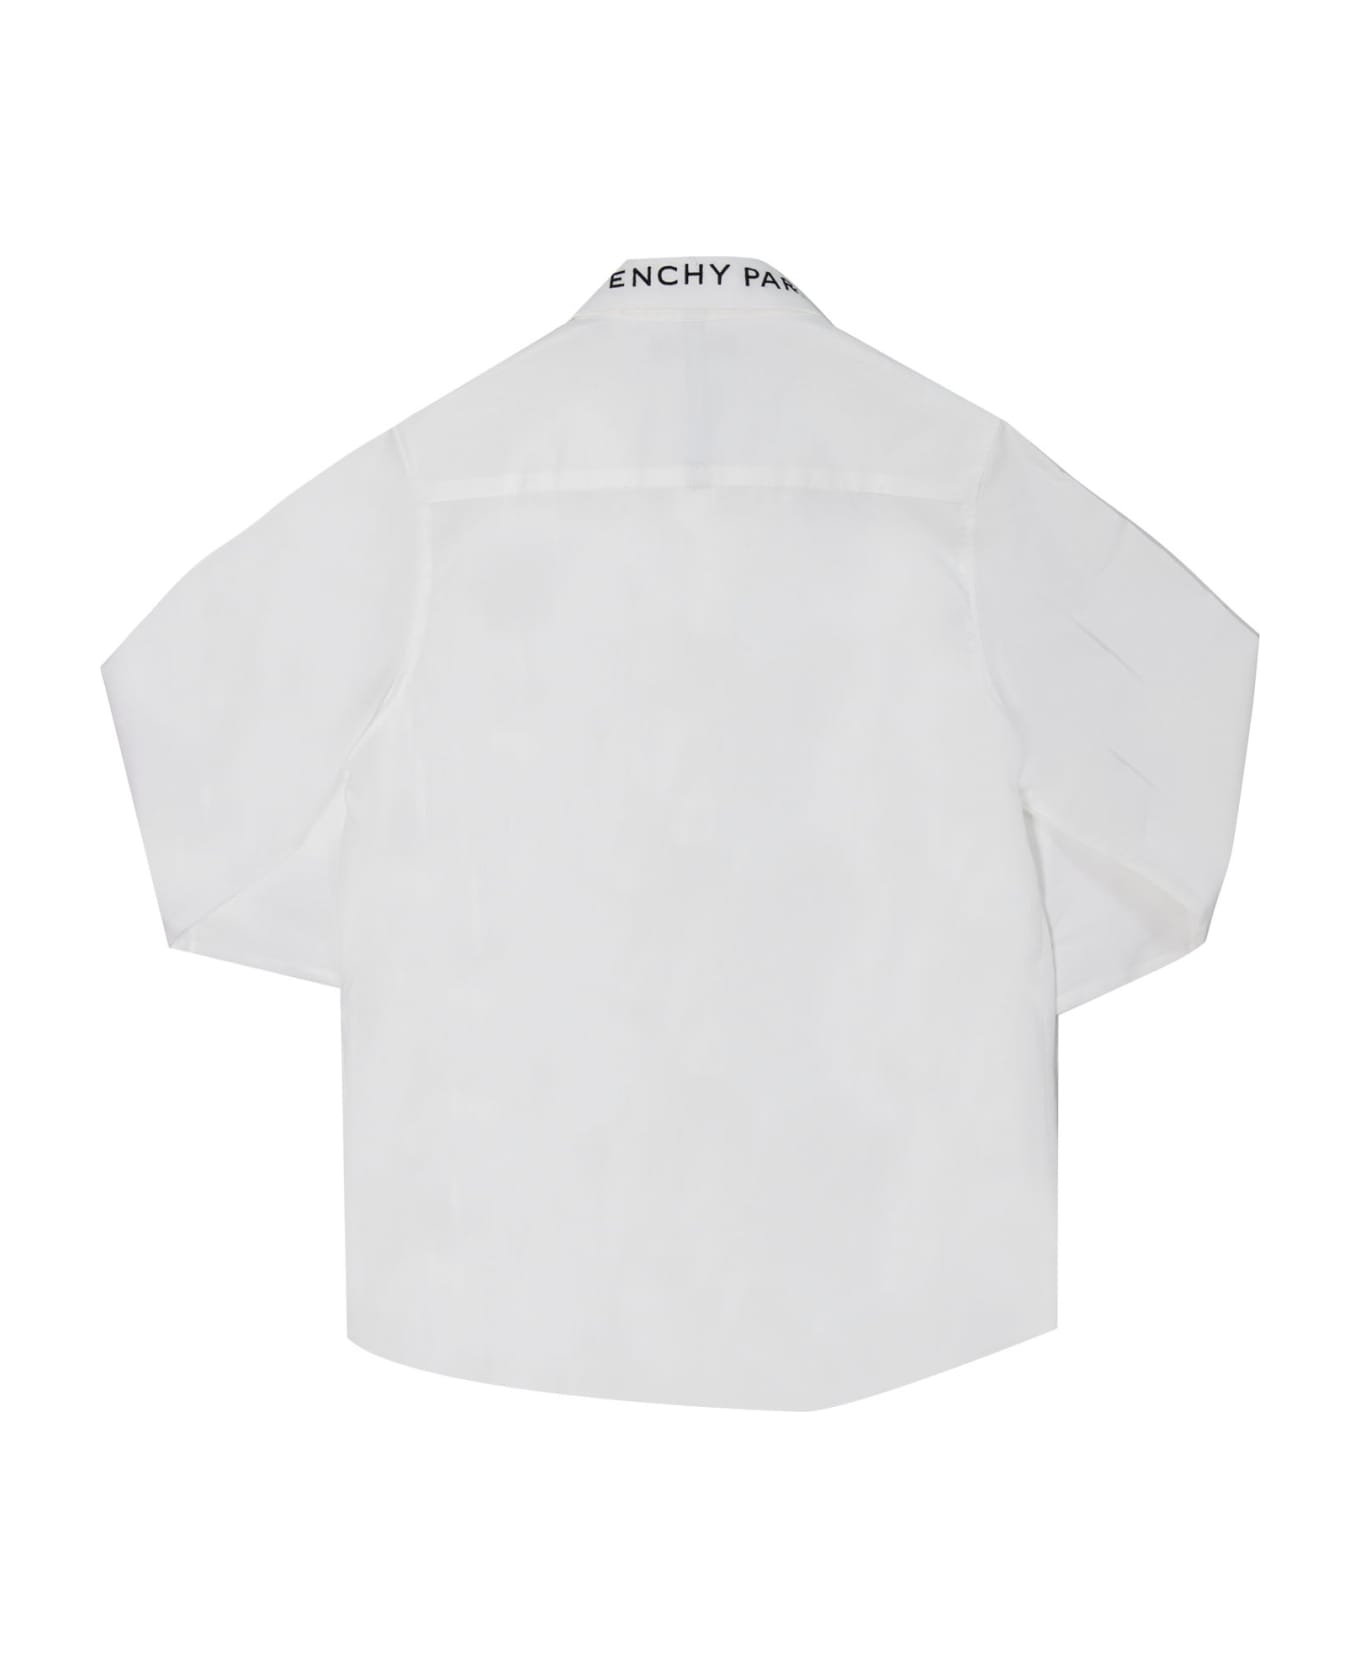 Givenchy Cotton Shirt - White シャツ